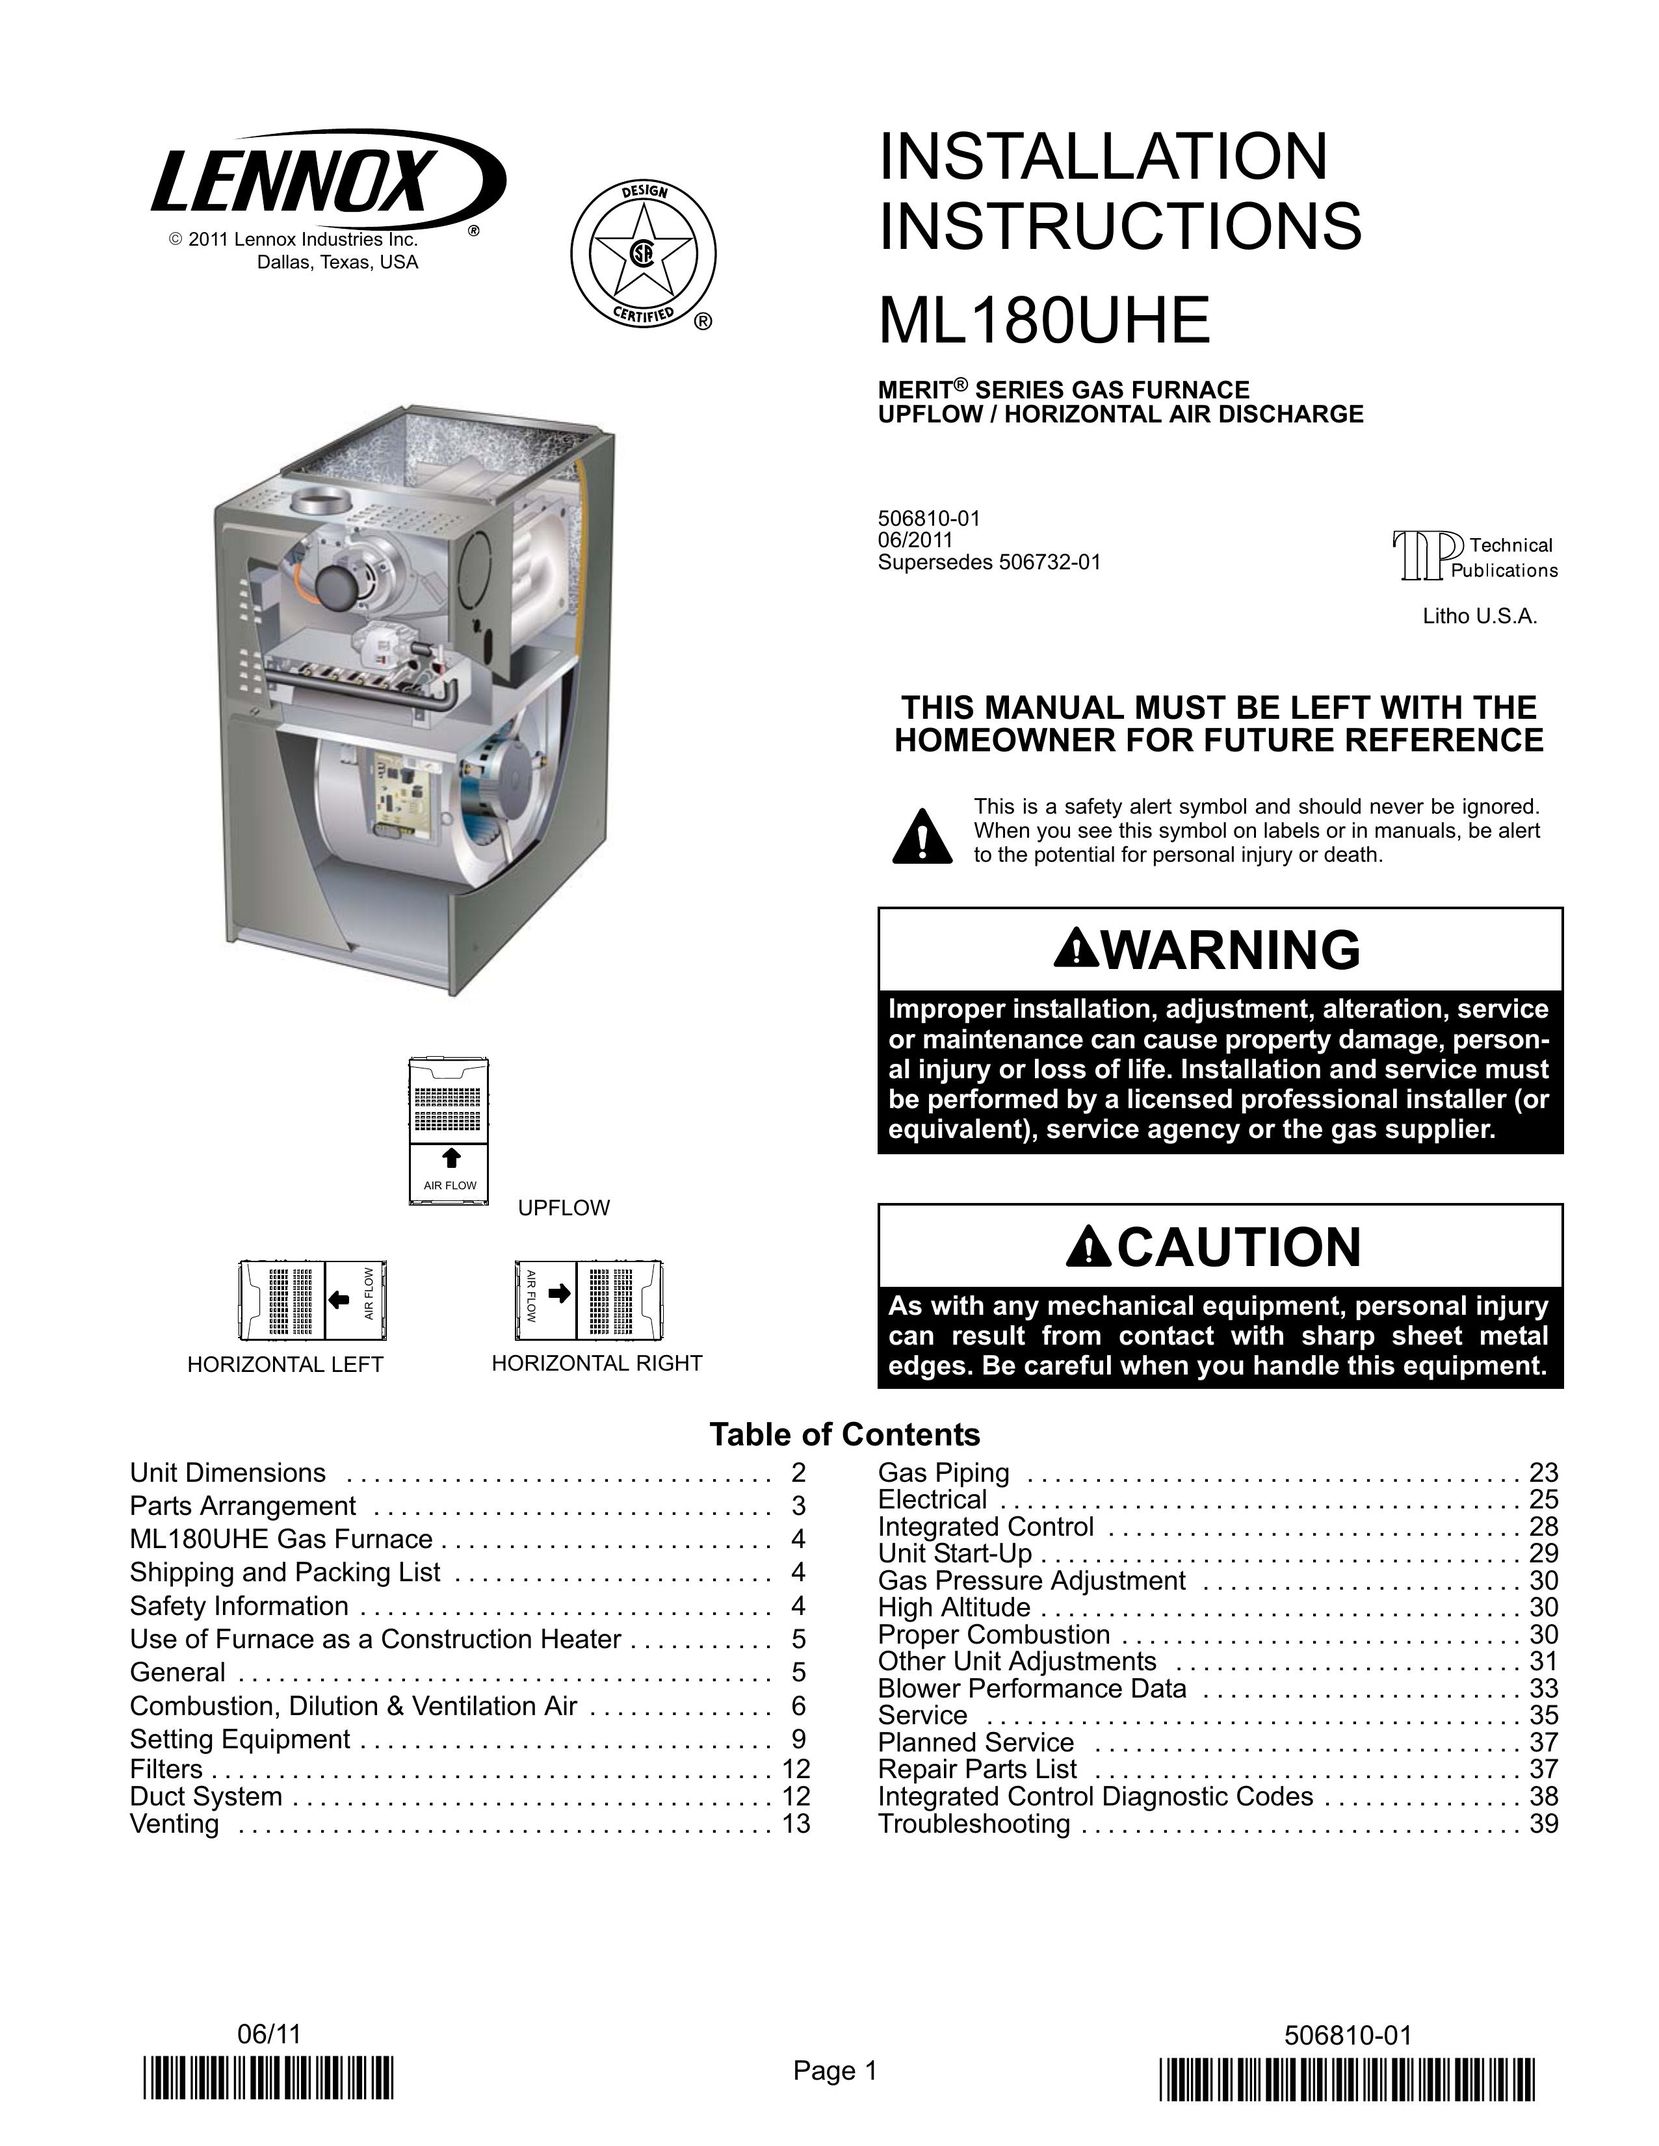 Lenox Lennox Merit Series Gas Furnace Upflow/Horizontal air discharge. Furnace User Manual